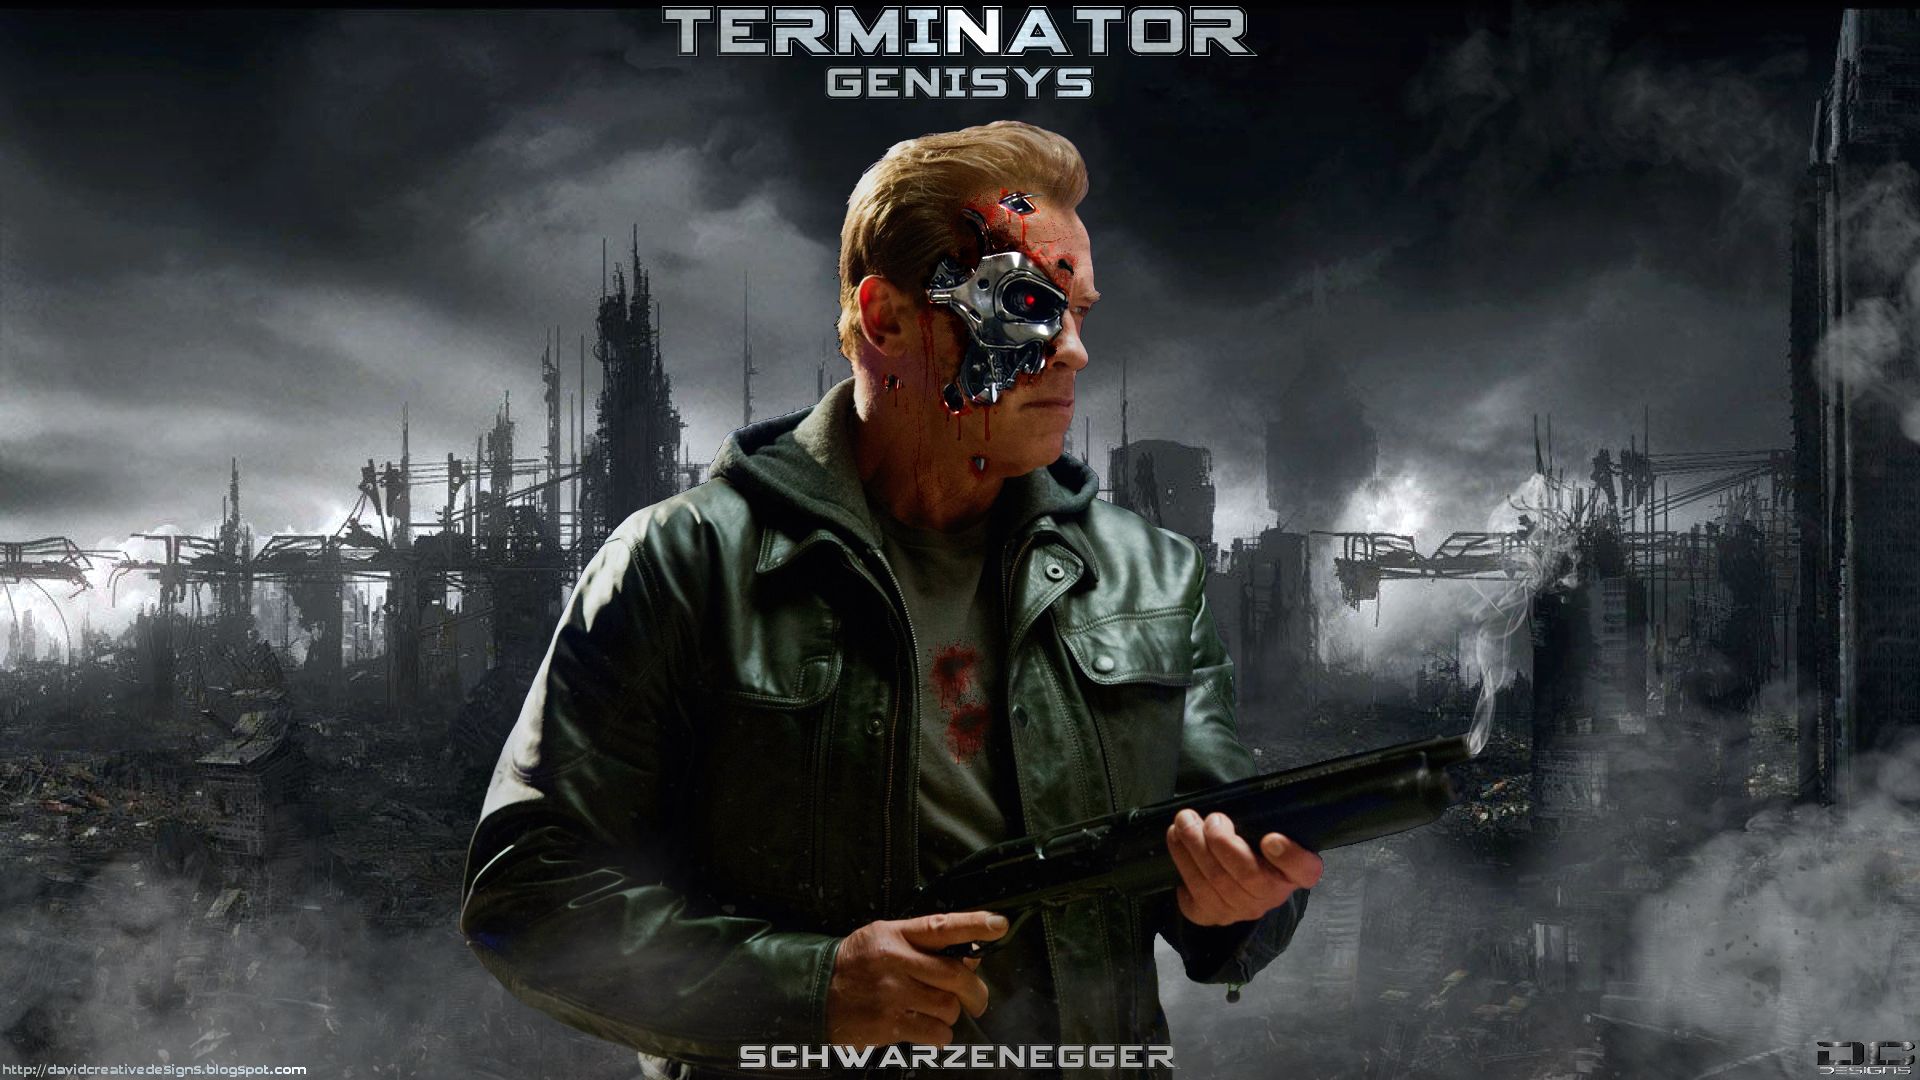 arnold schwarzenegger, movie, terminator genisys, poster, terminator